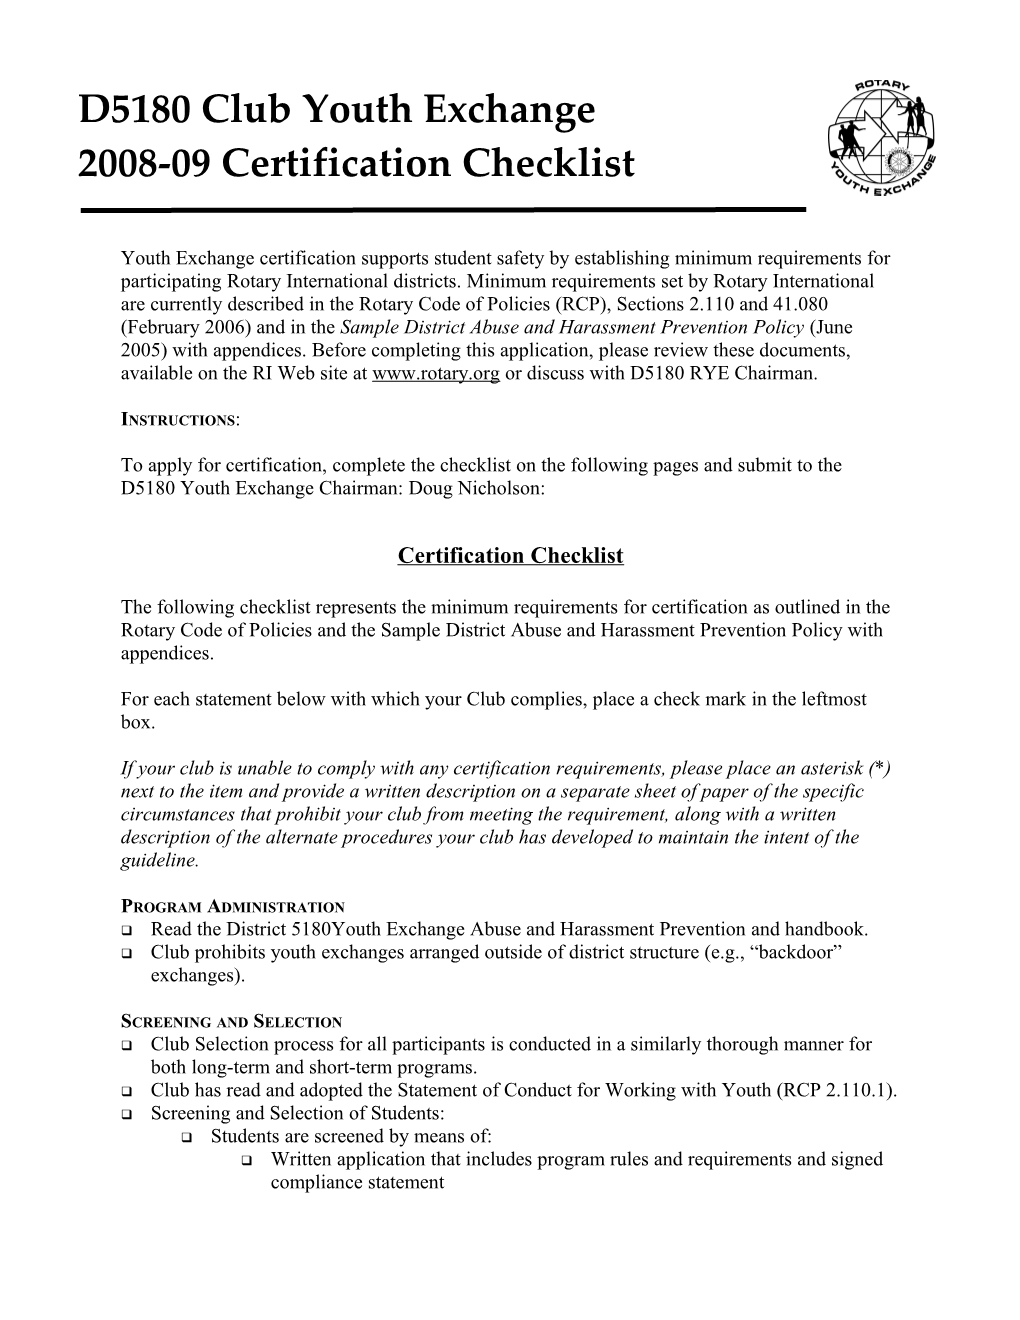 Certification Application & Compliance Statement